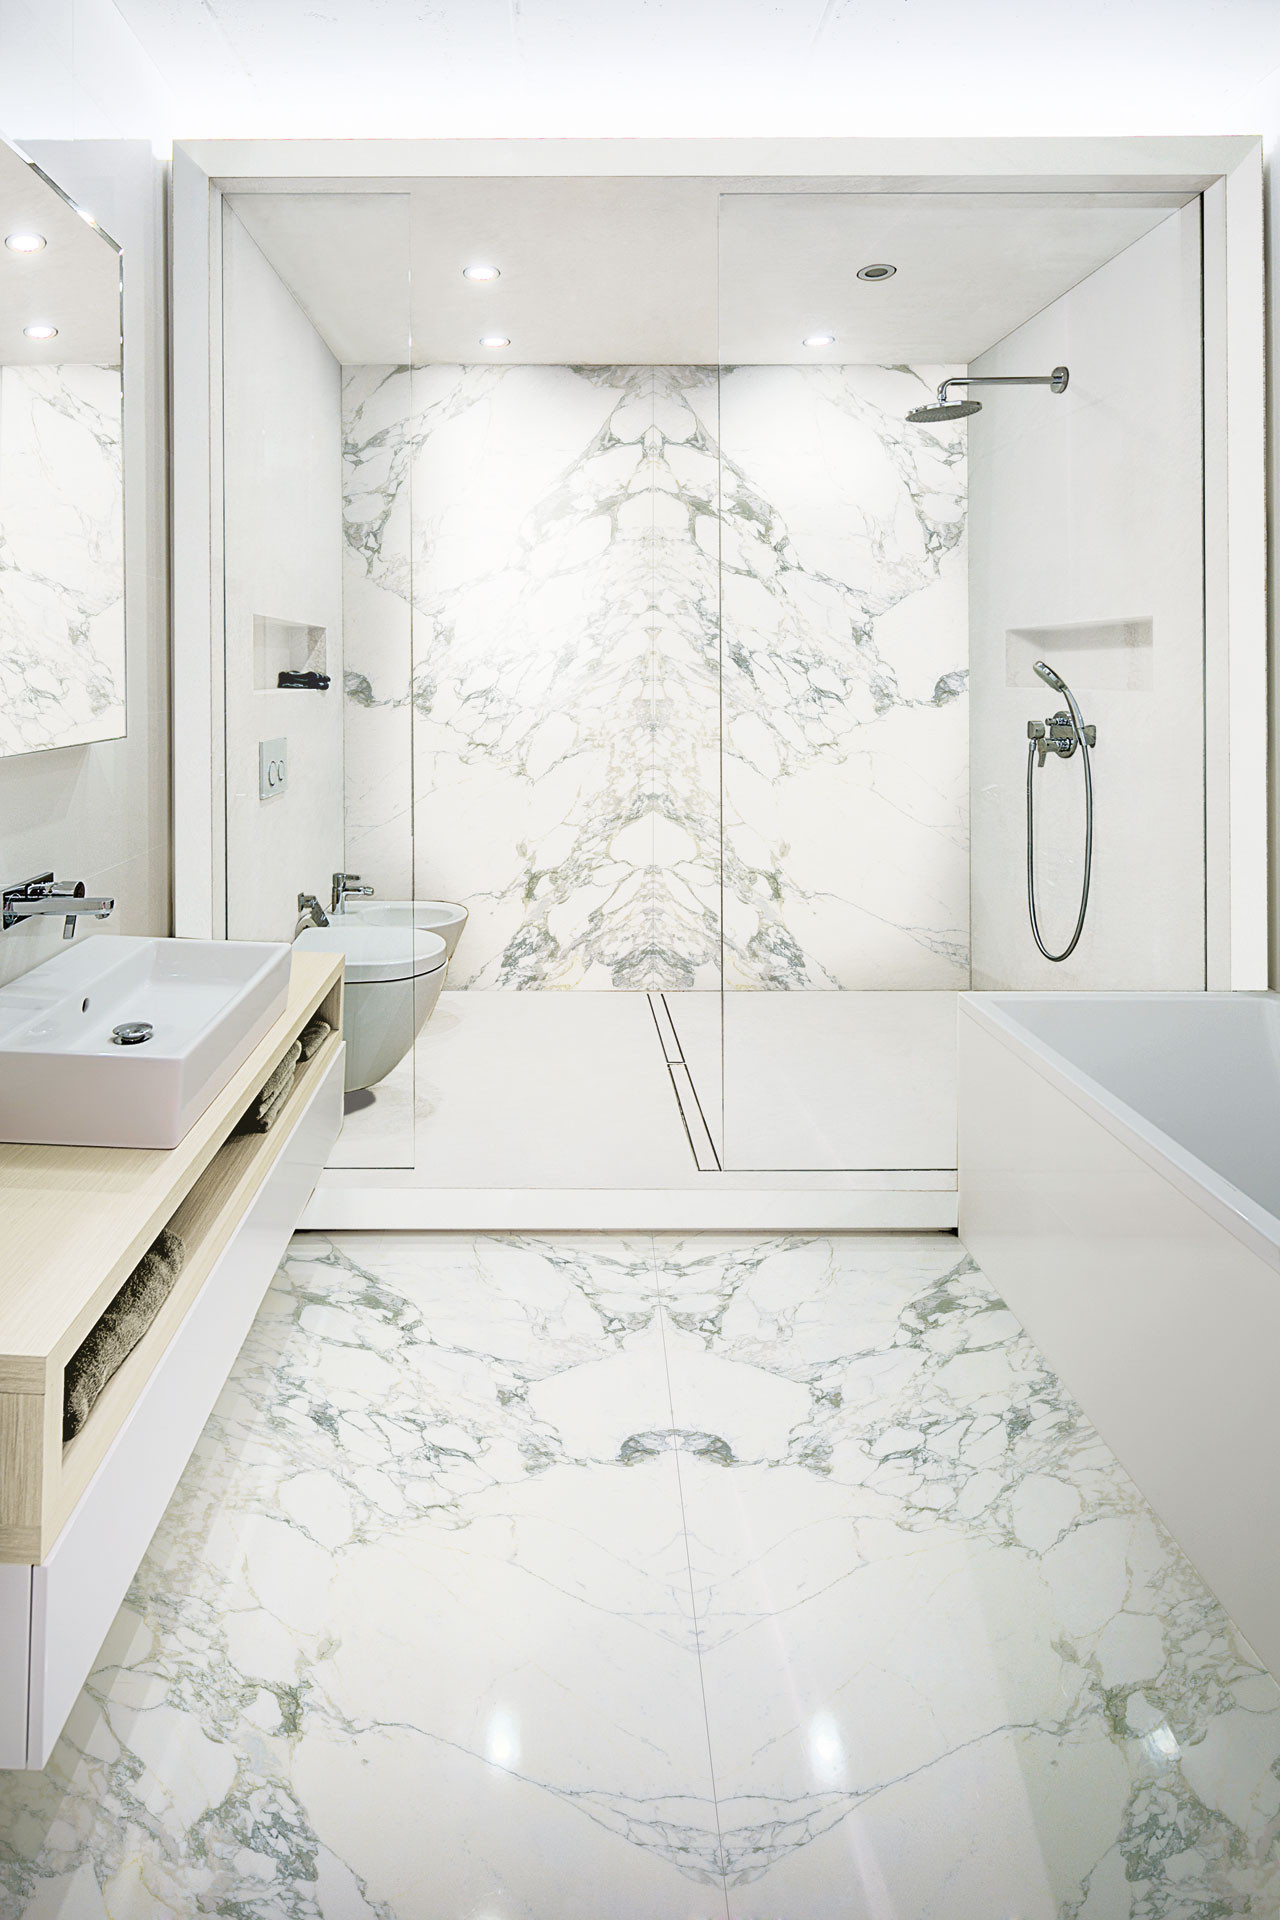 Bathroom Porcelain Tile
 The contemporary bathroom with Stonepeak’s porcelain floor